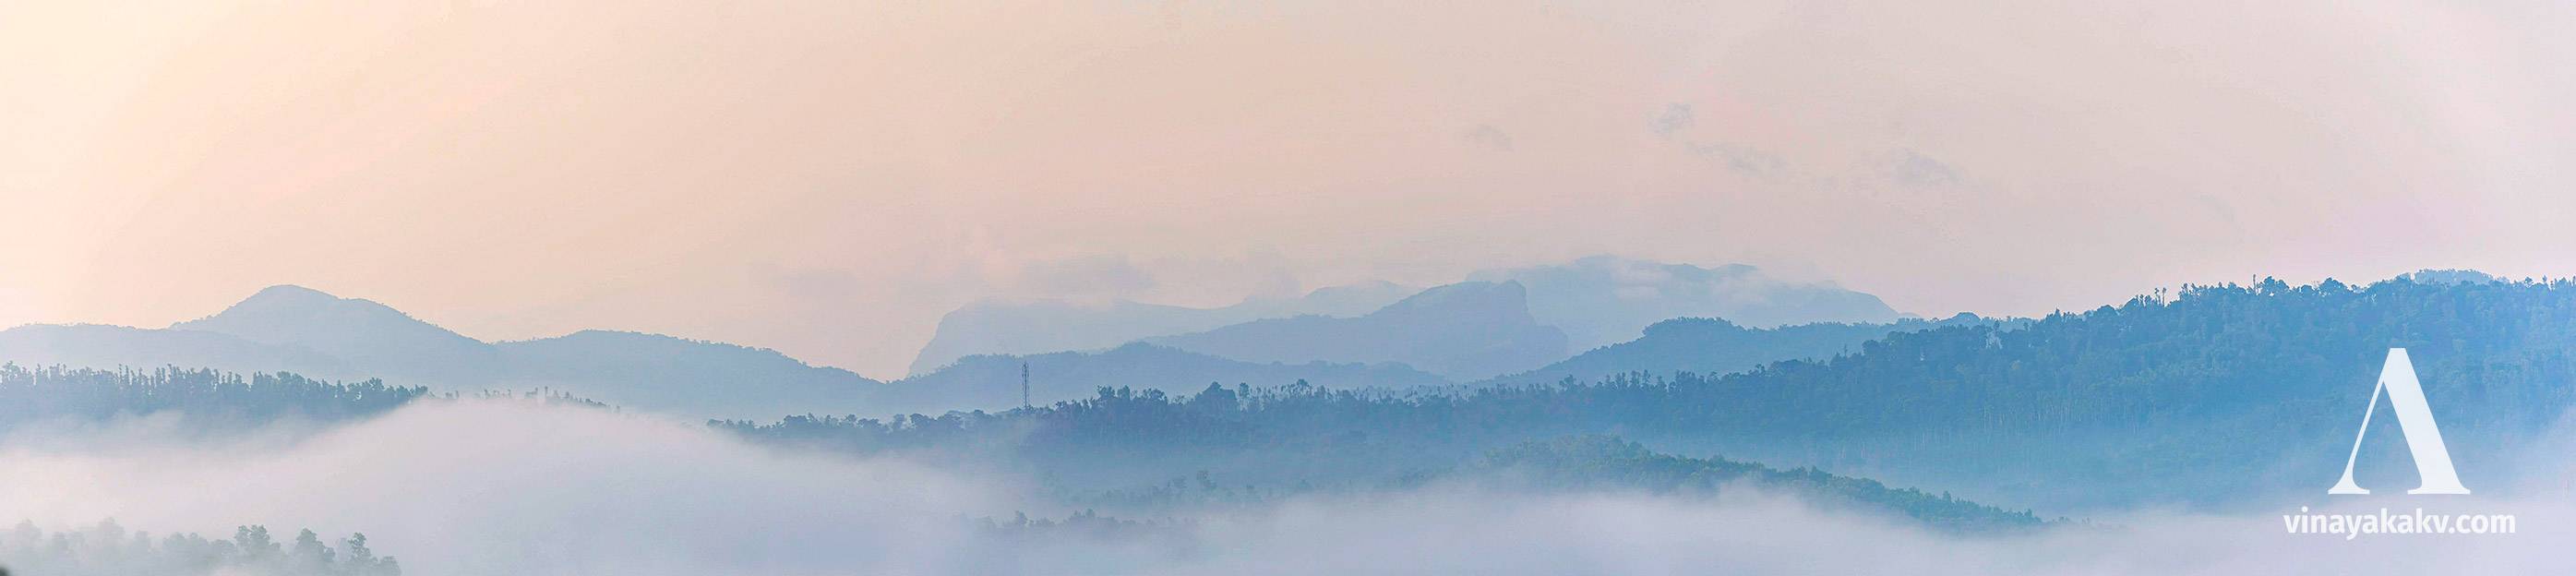 The mountains seen above the inversion layer. At the center, _Ballalaayana Durga_ (1509m) and _Rani Jhari_ cliff.